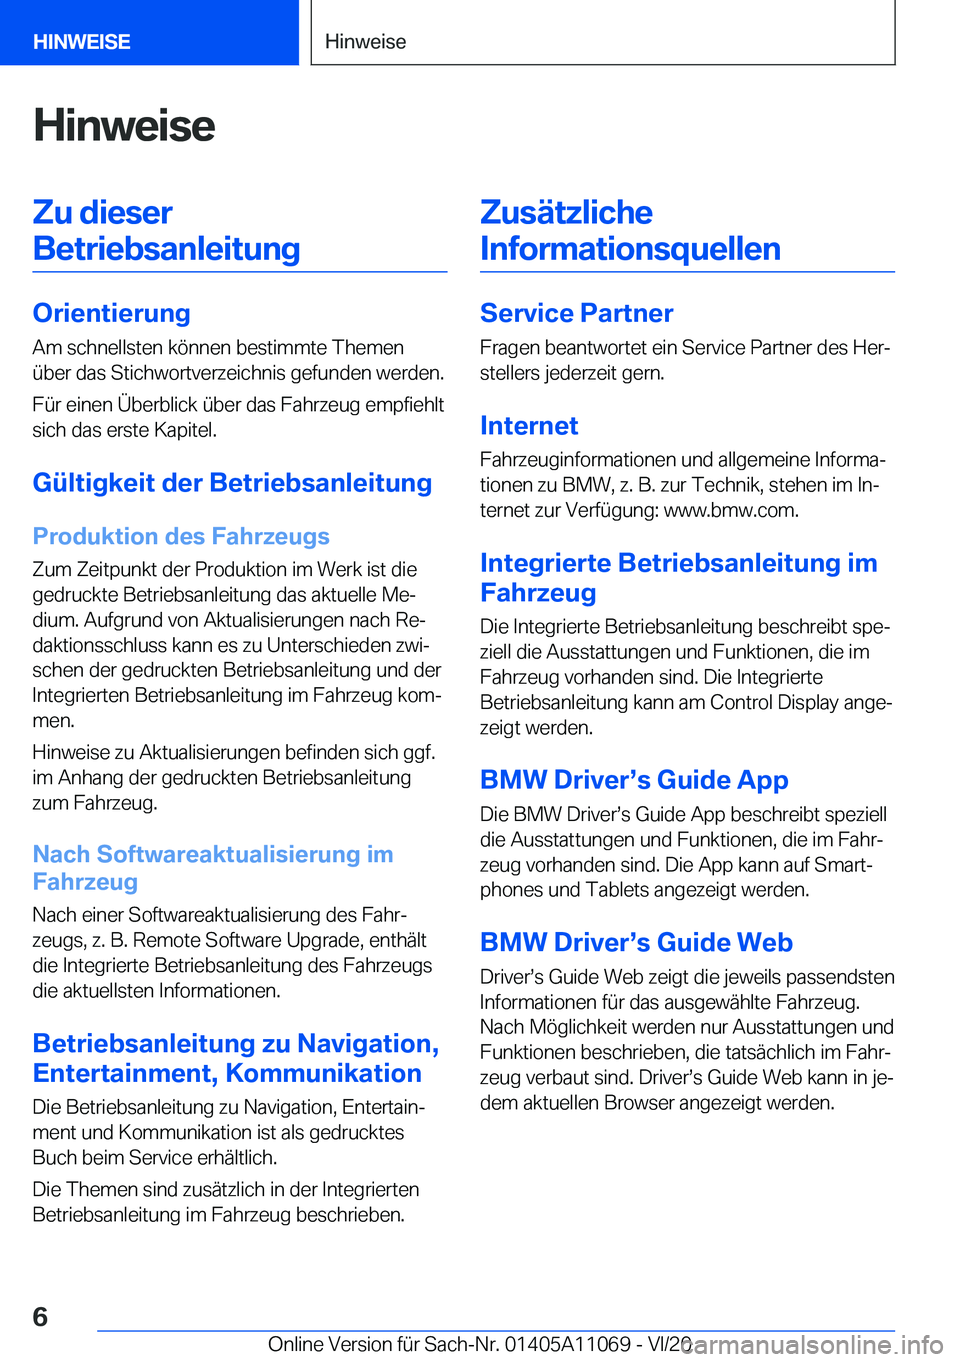 BMW 7 SERIES 2021  Betriebsanleitungen (in German) �H�i�n�w�e�i�s�e�Z�u��d�i�e�s�e�r�B�e�t�r�i�e�b�s�a�n�l�e�i�t�u�n�g
�O�r�i�e�n�t�i�e�r�u�n�g �A�m��s�c�h�n�e�l�l�s�t�e�n��k�